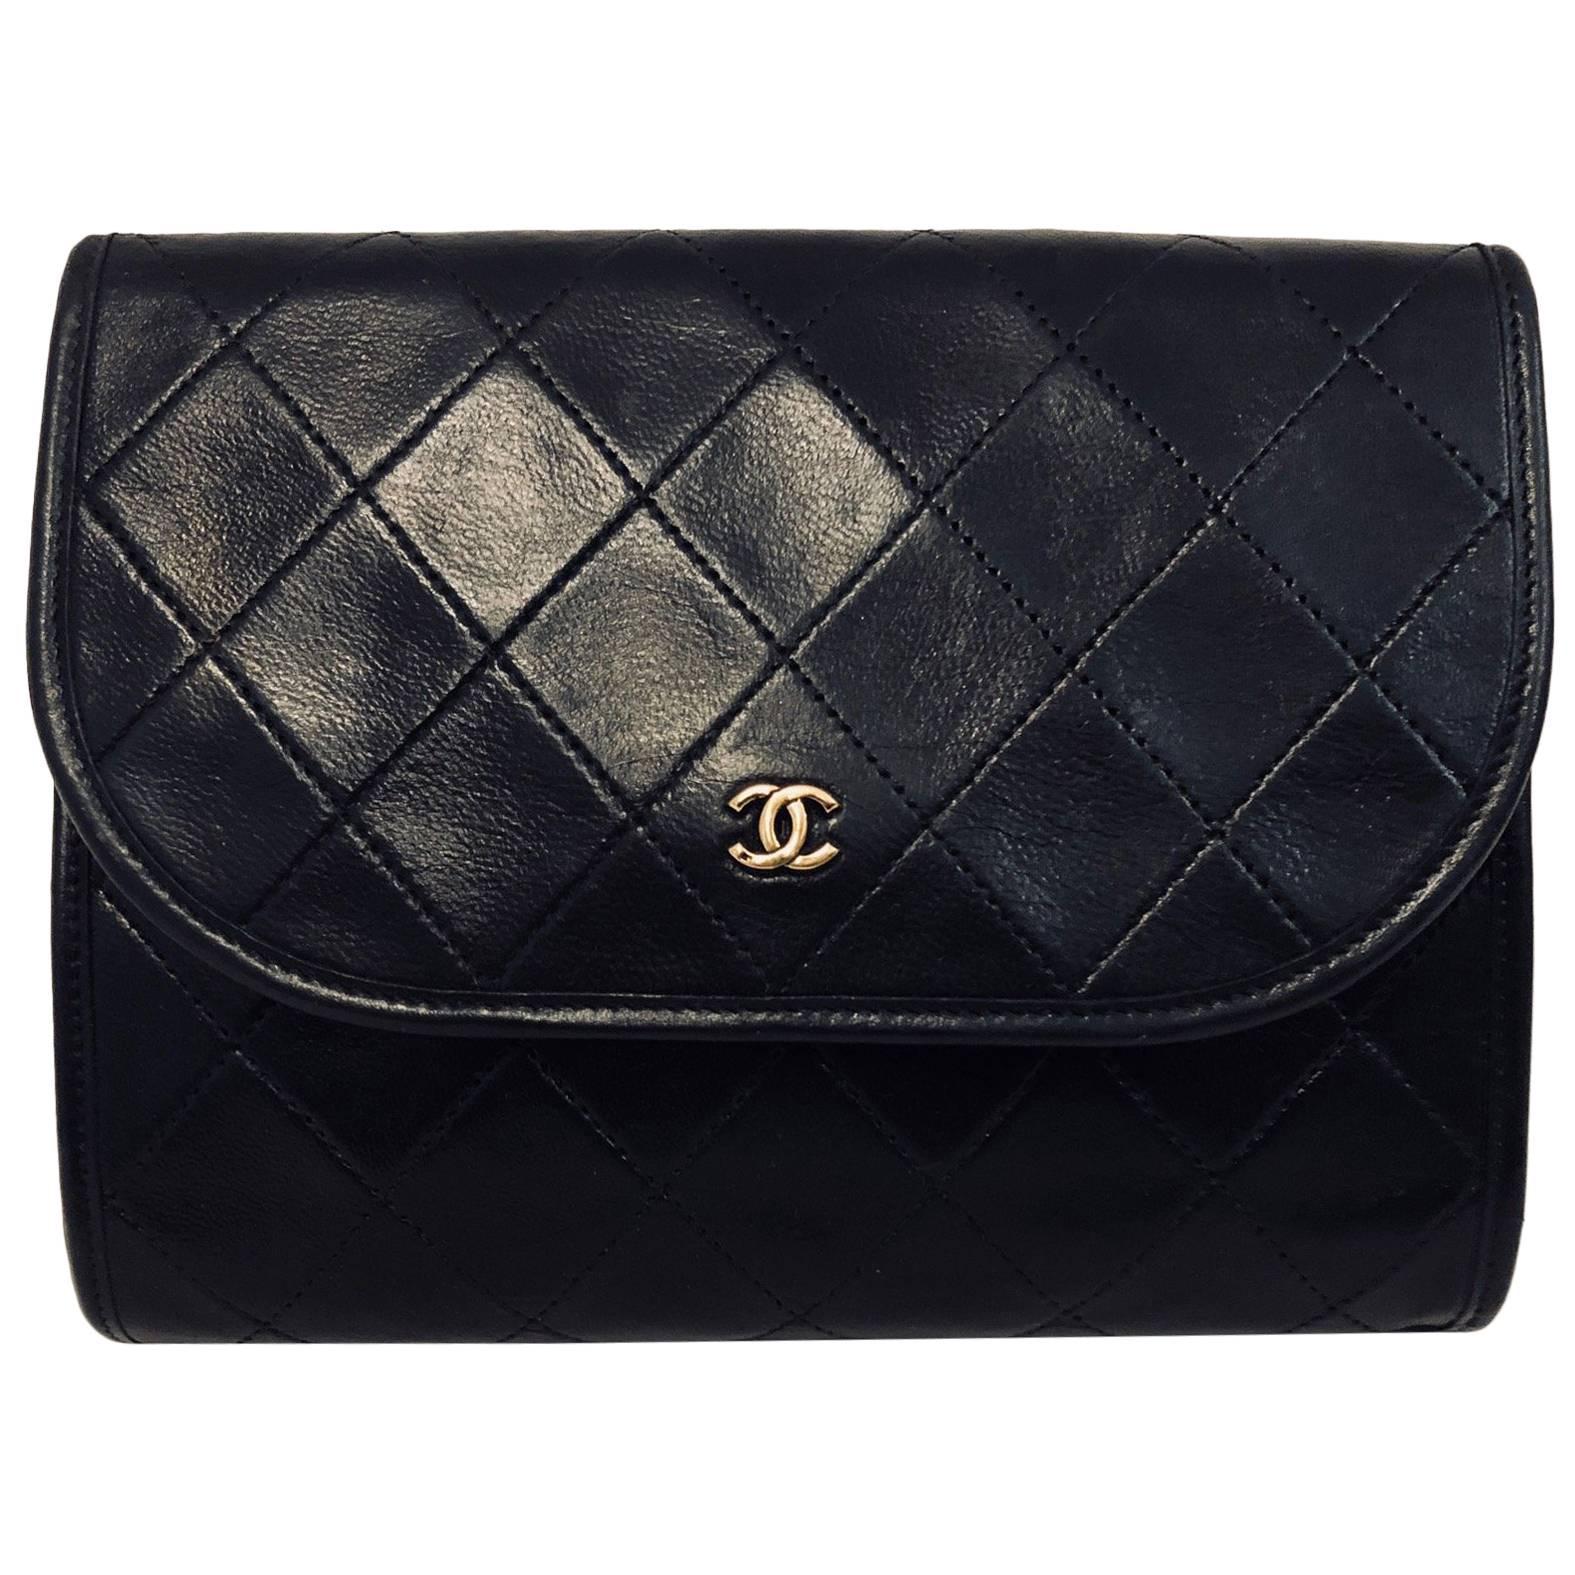 Chanel Vintage Convertible Black Clutch Diamond  Bag